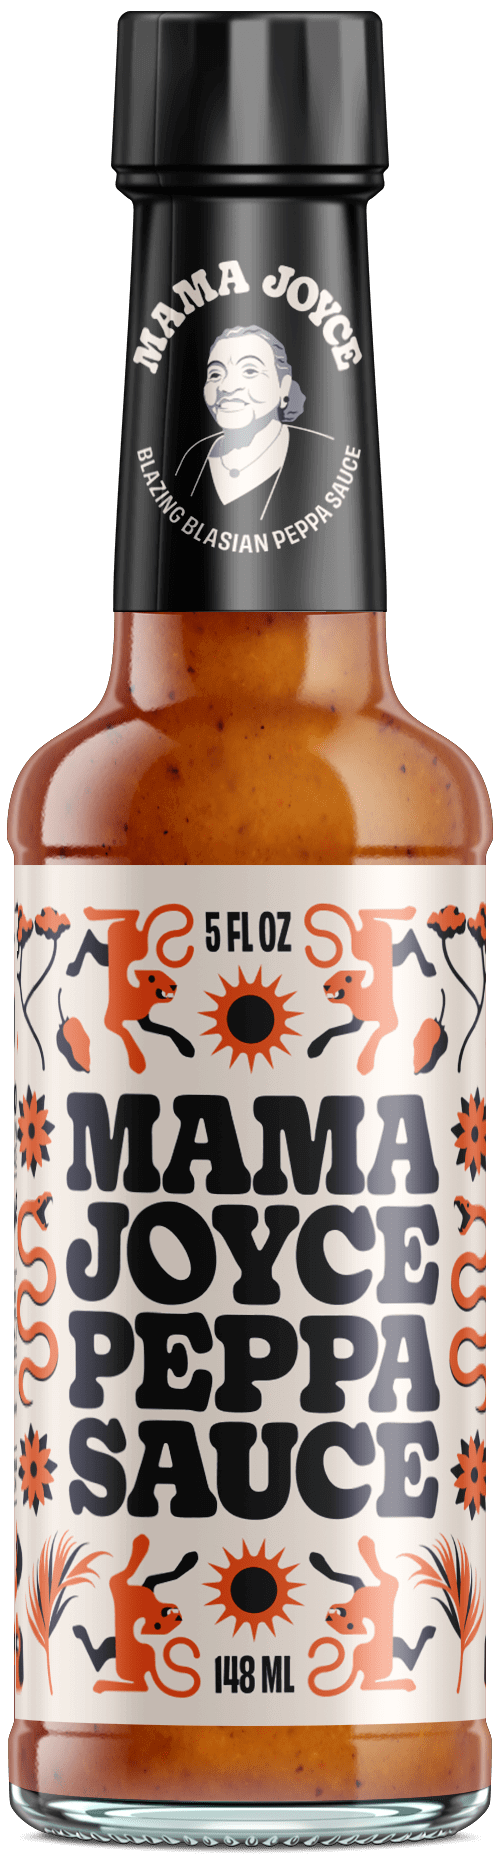 Bottle of Mama Joyce Peppa Sauce